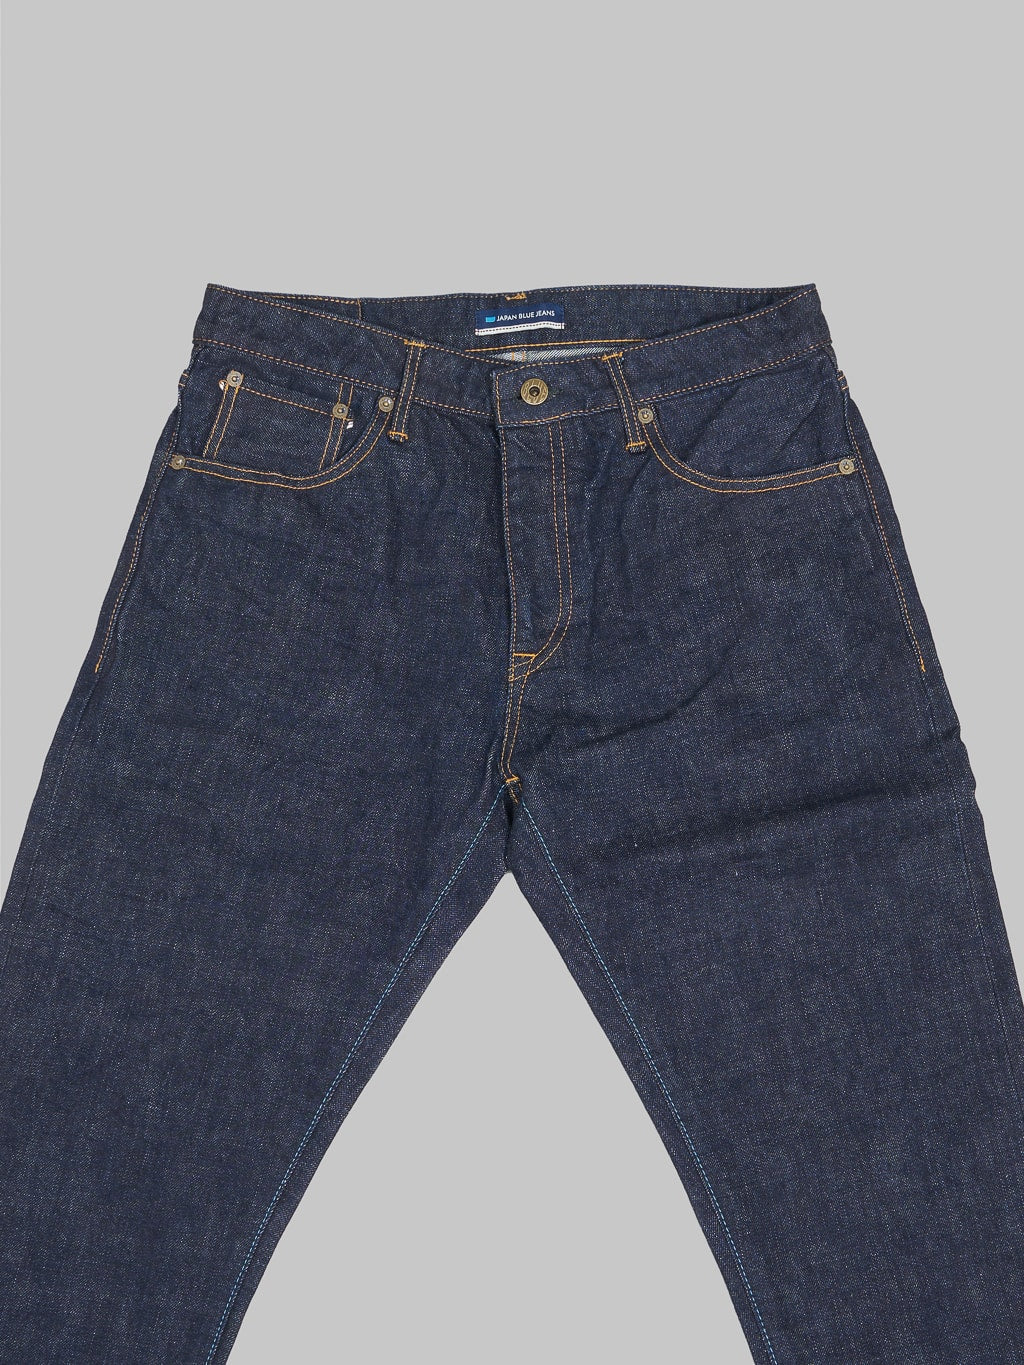 Japan Blue J301 US Cotton Circle Straight Jeans waist